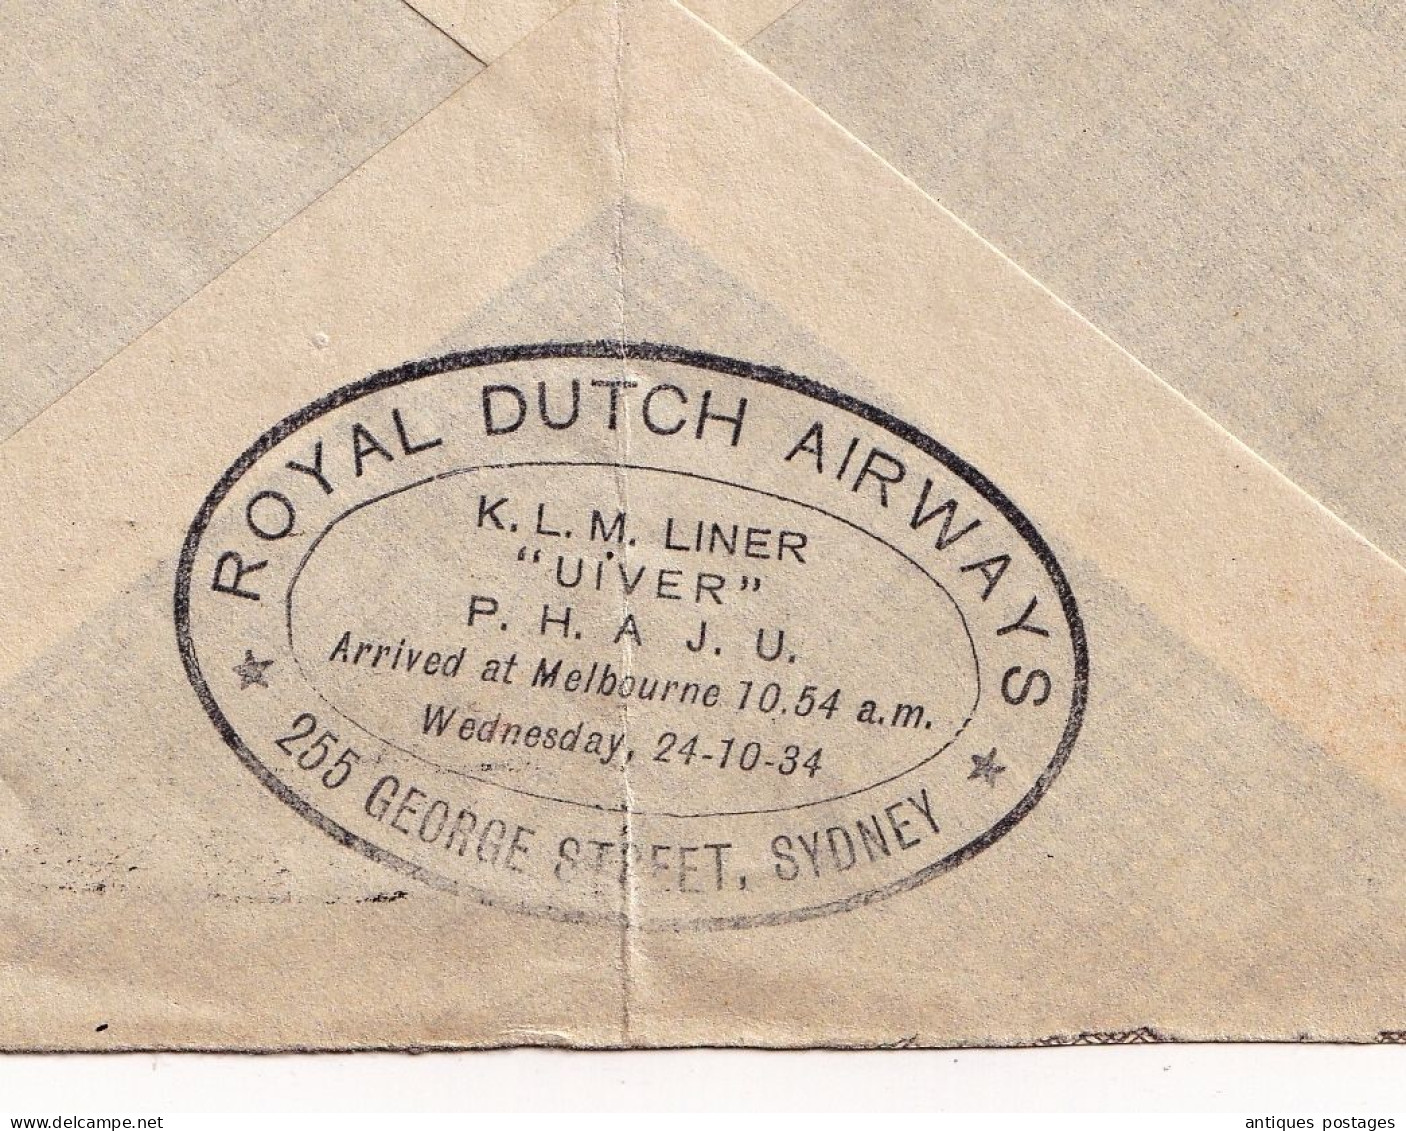 Sydney 1934 Australie Australia Royal Dutch Air Lines Airways Amsterdam Holland K.L.M. Liner " Uiver " P.H.A.J.U. - Lettres & Documents